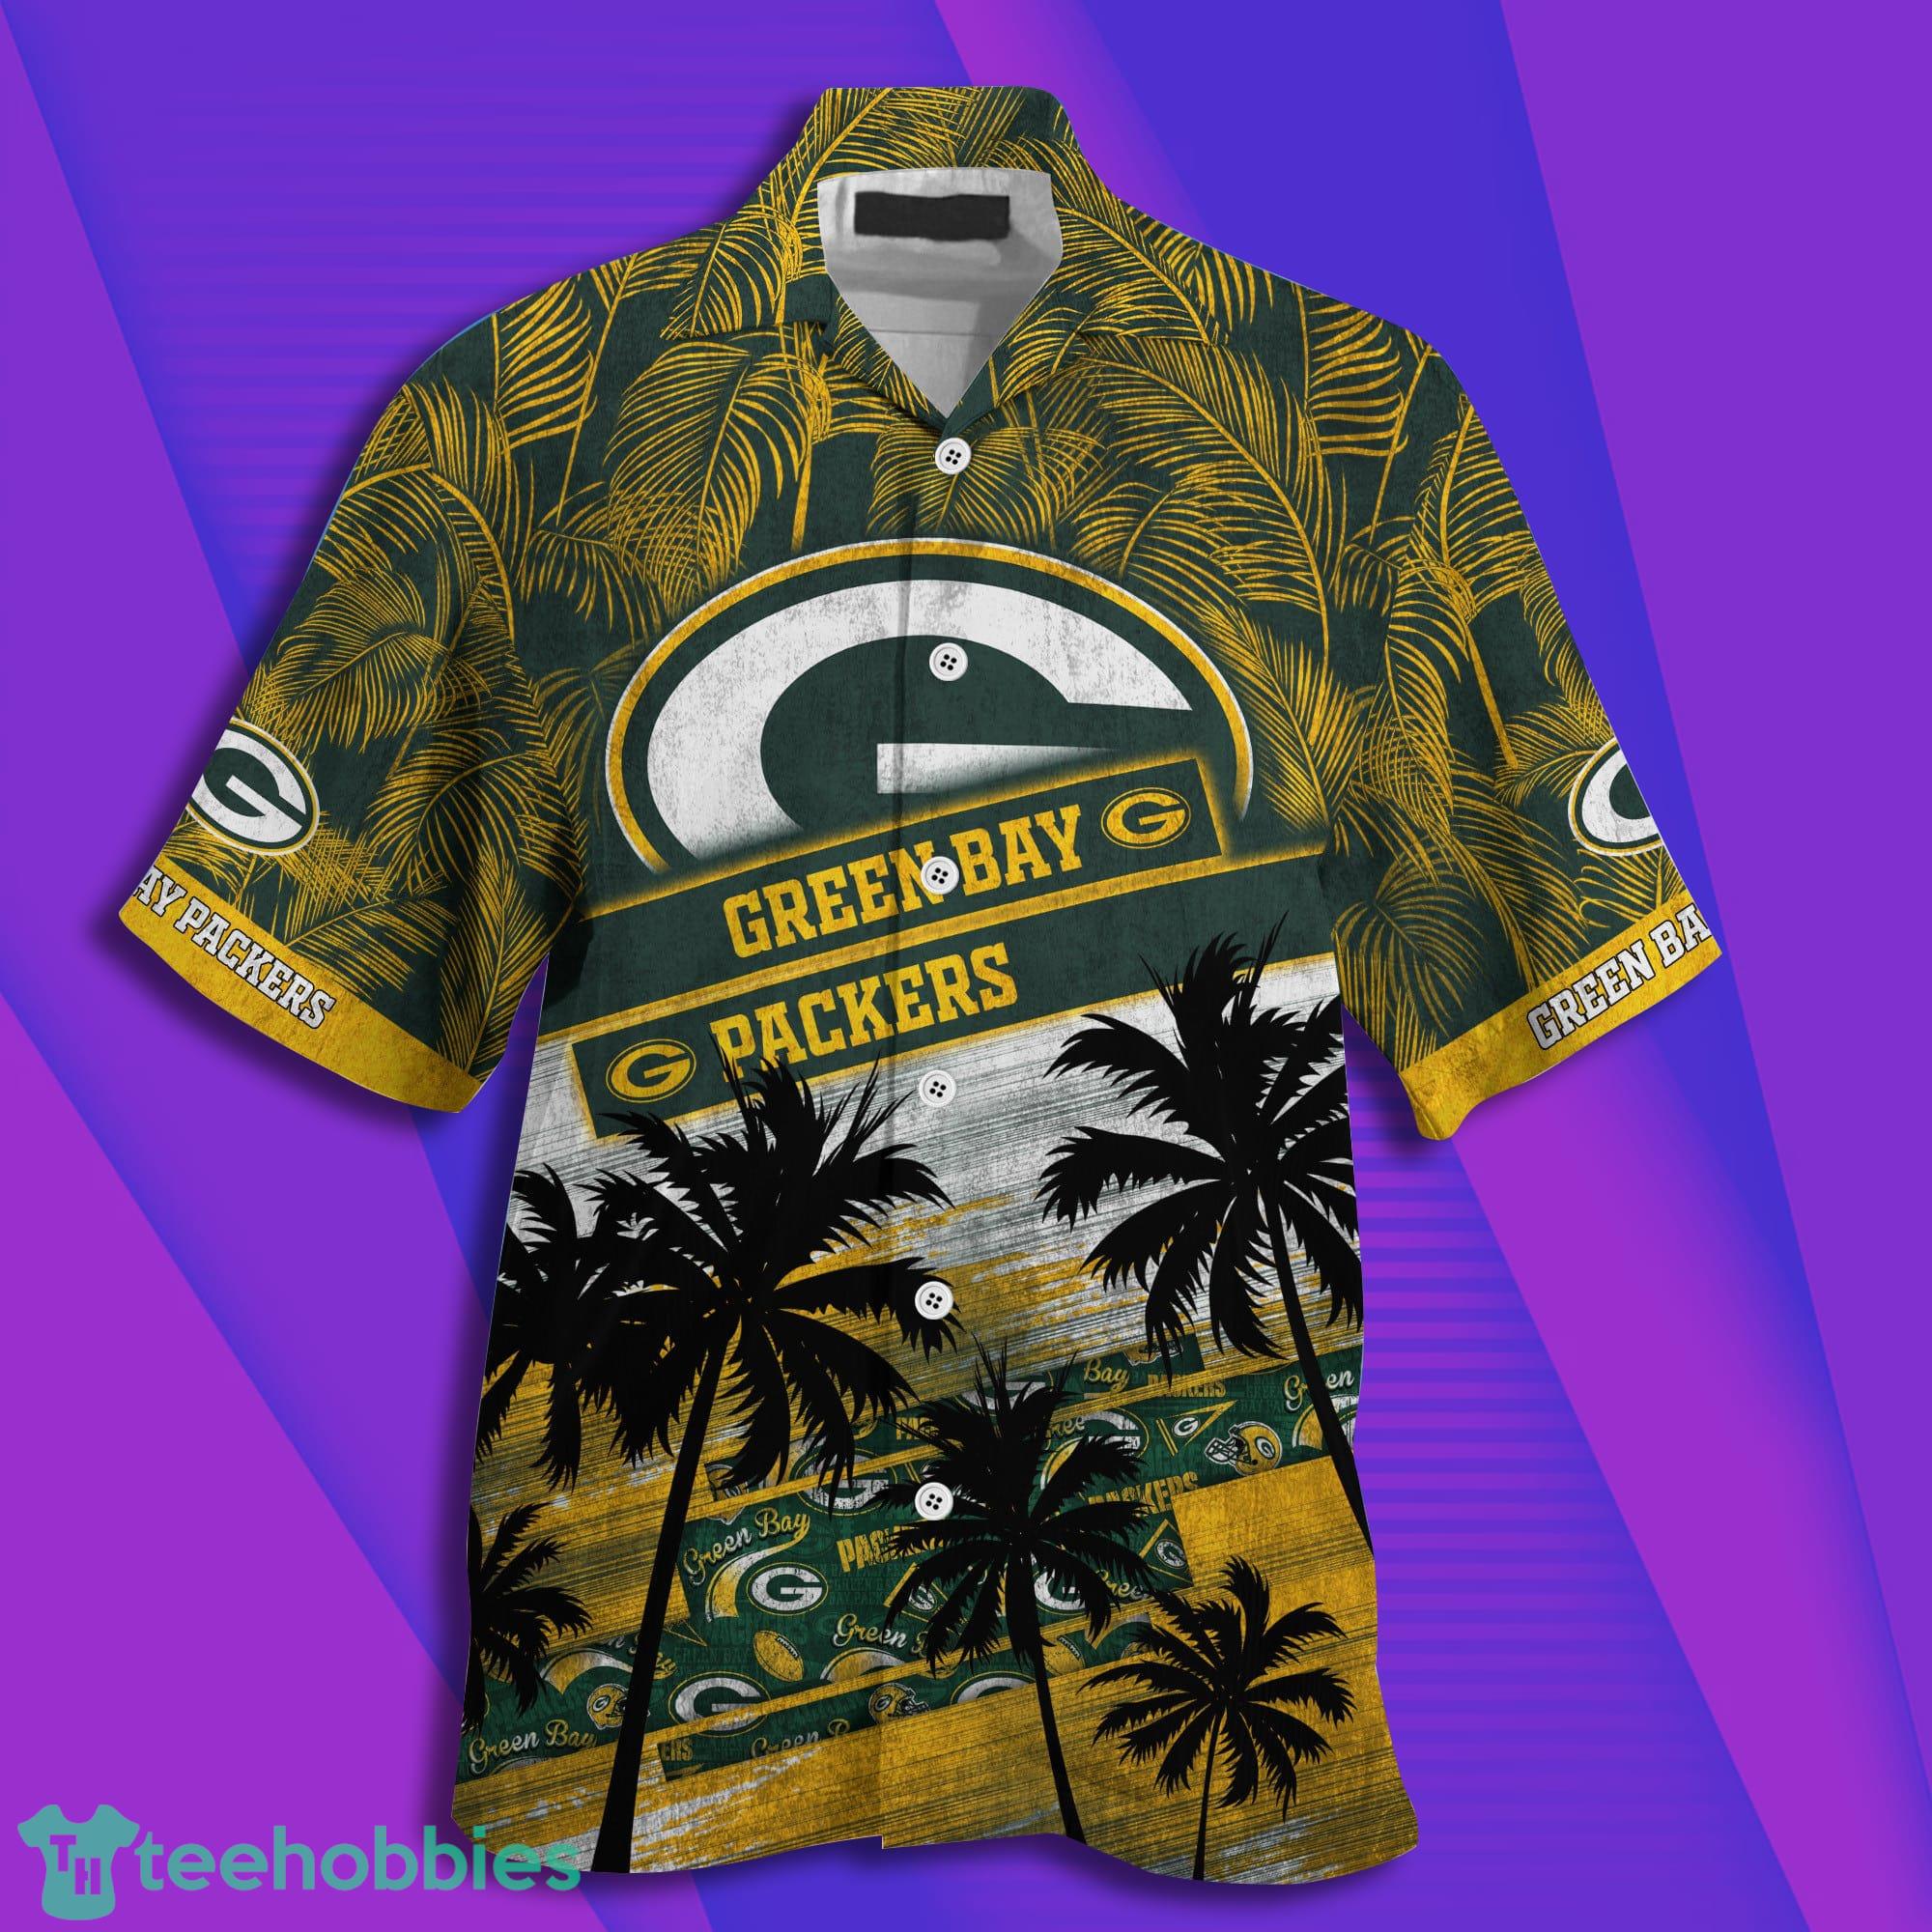 San Francisco Giants Green Leaf Pattern Tropical Hawaiian Shirt For Men And  Women - Freedomdesign